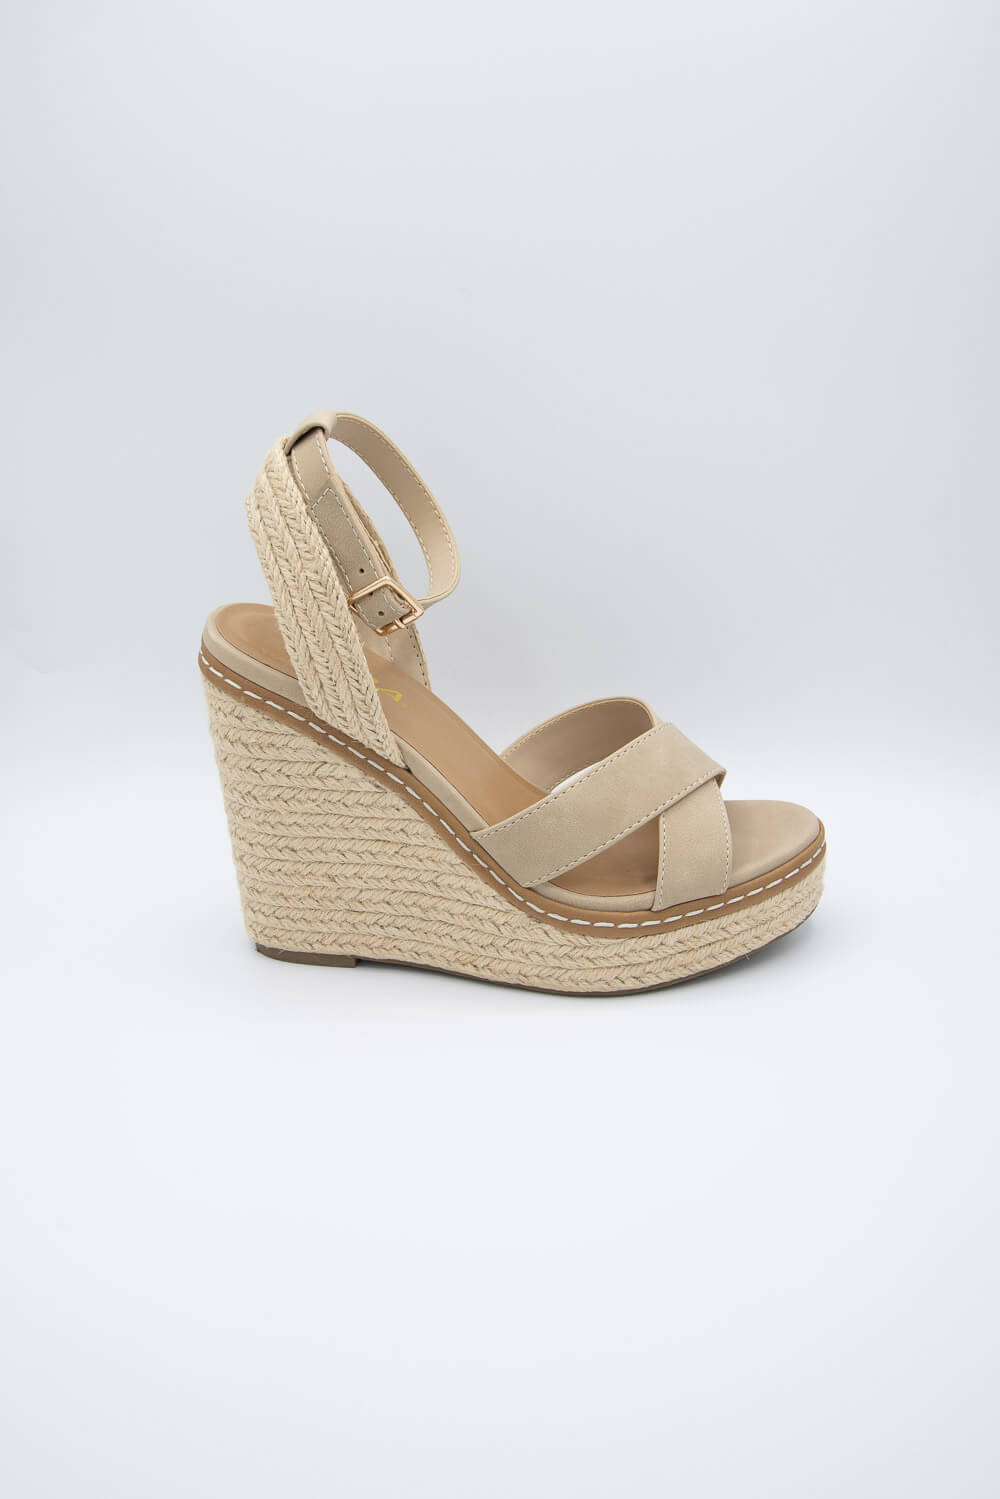 New Fashion Women Wedges Sandals Platform High Heels Shoes Woman Plus Size  4-15 | eBay